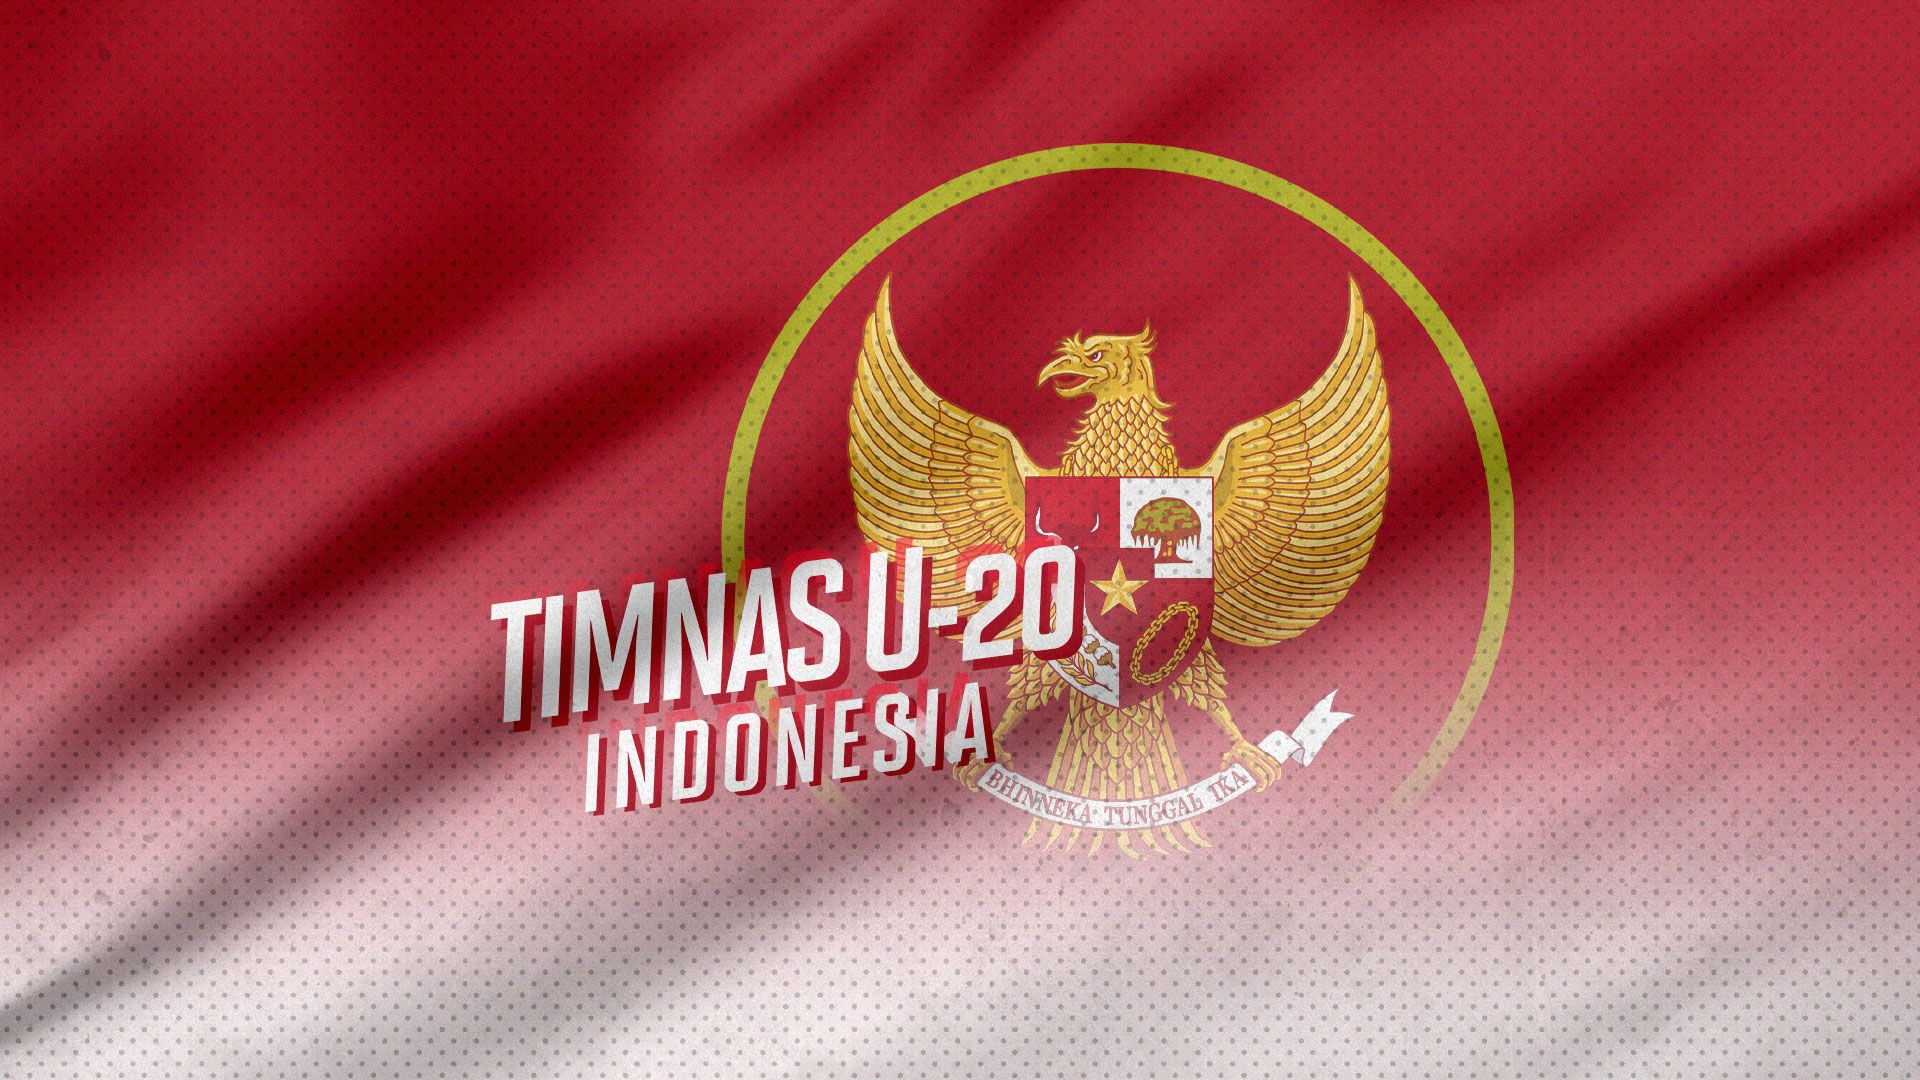 Timnas U-20 Indonesia. (Hendy AS/Skor.id)